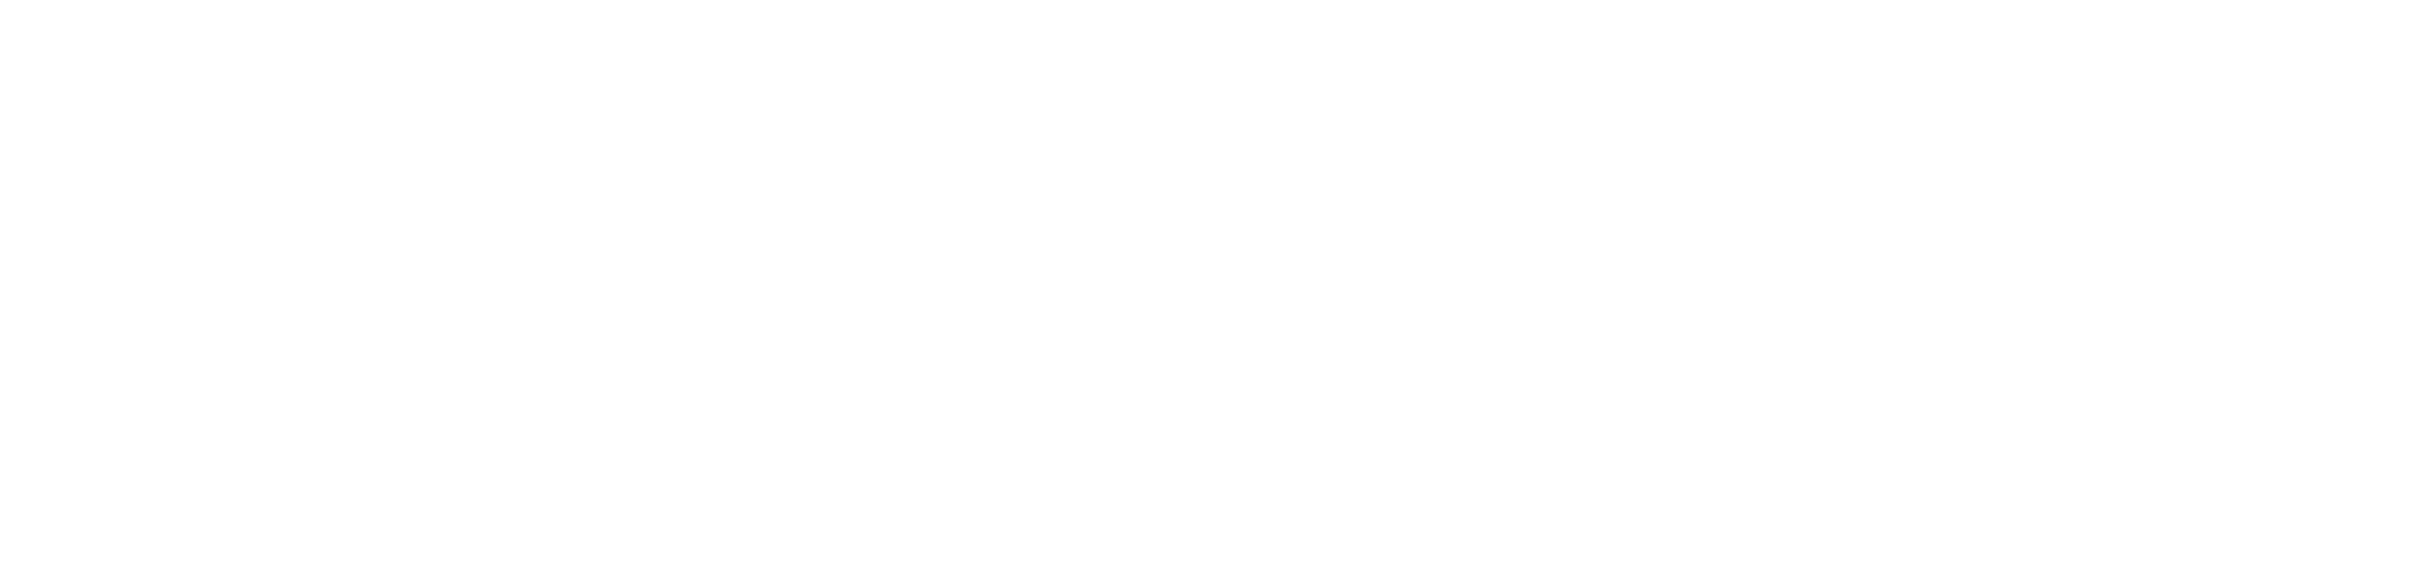 La carte blanche de Jérémy Demay